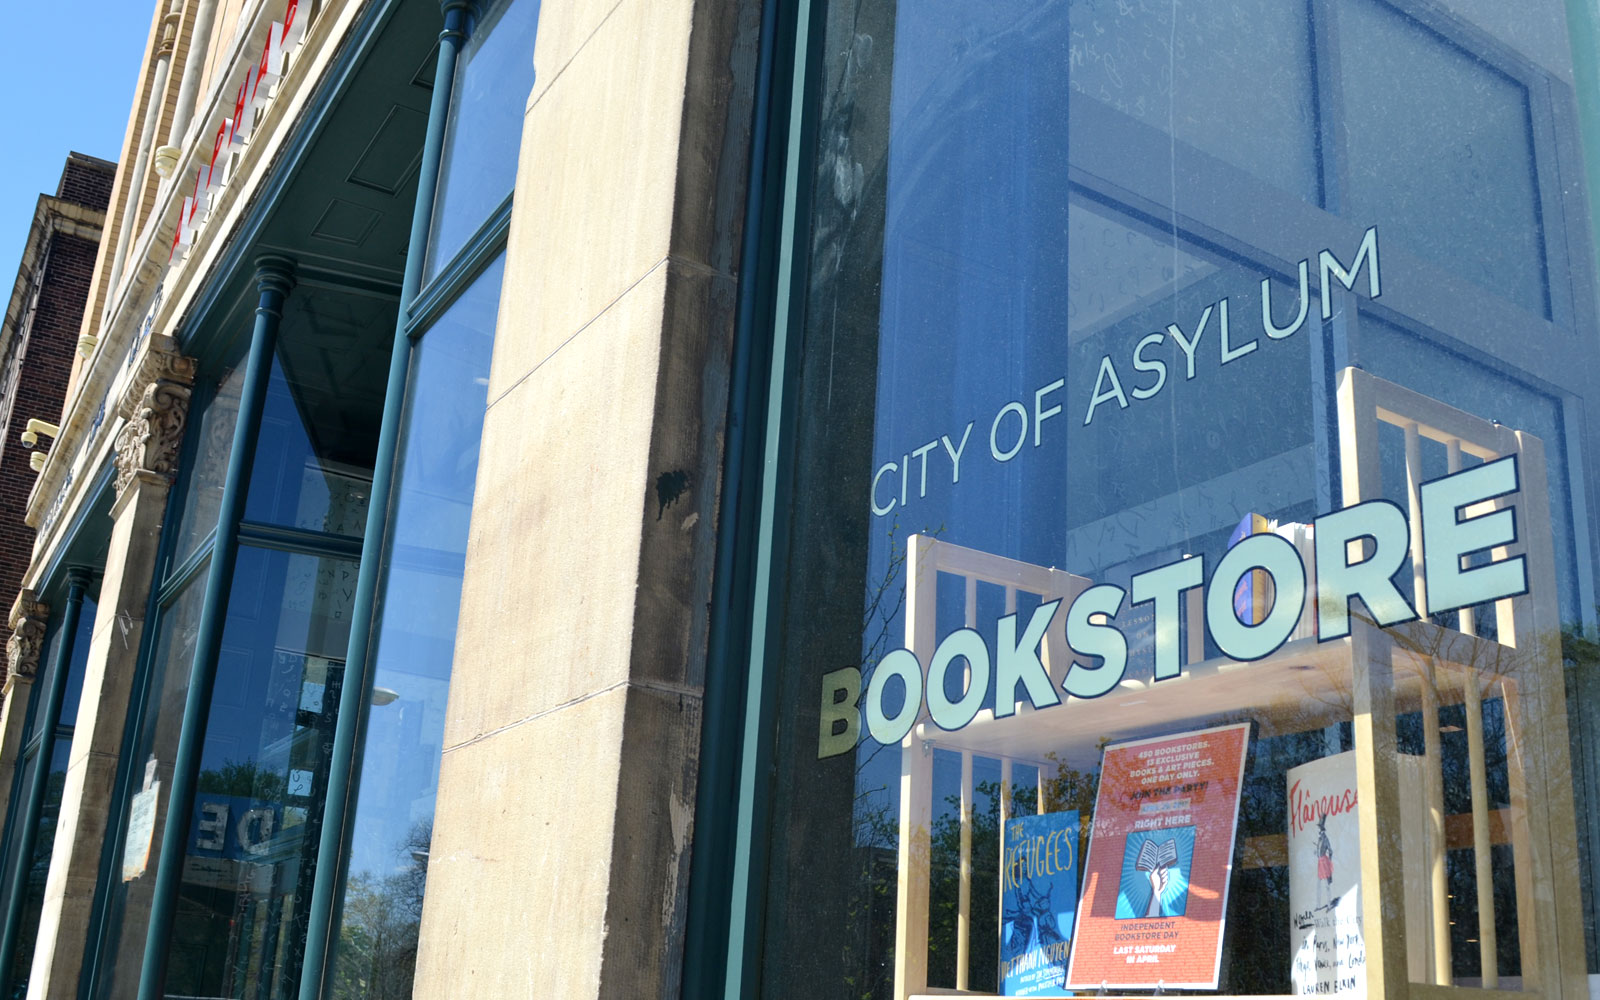 City of Asylum Bookstore window sign